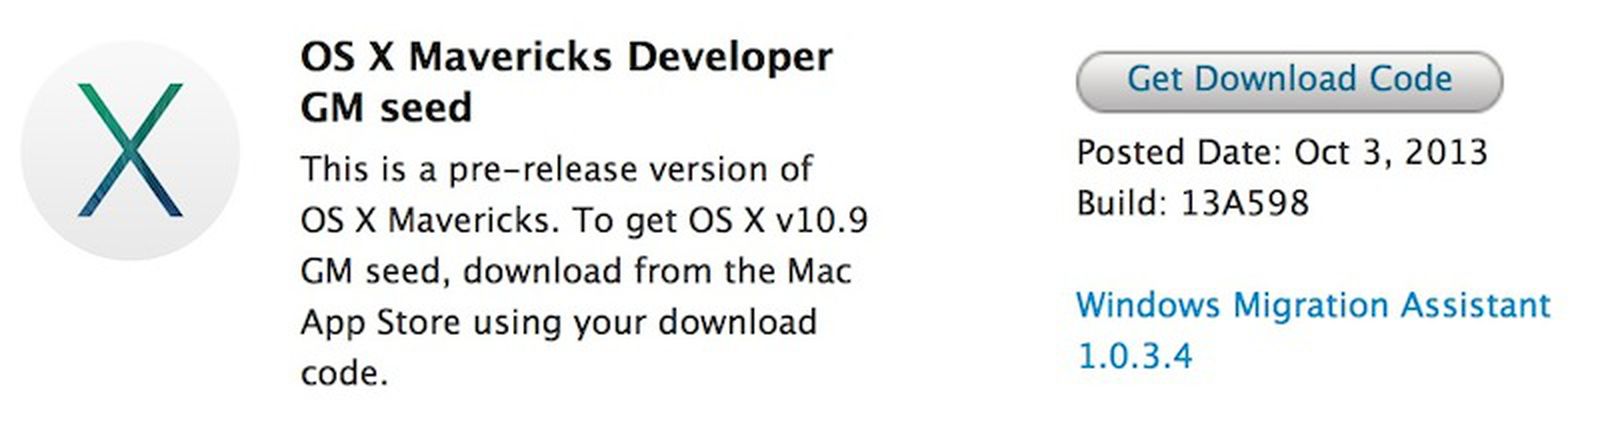 Os x 10.9 mavericks download from mac app store